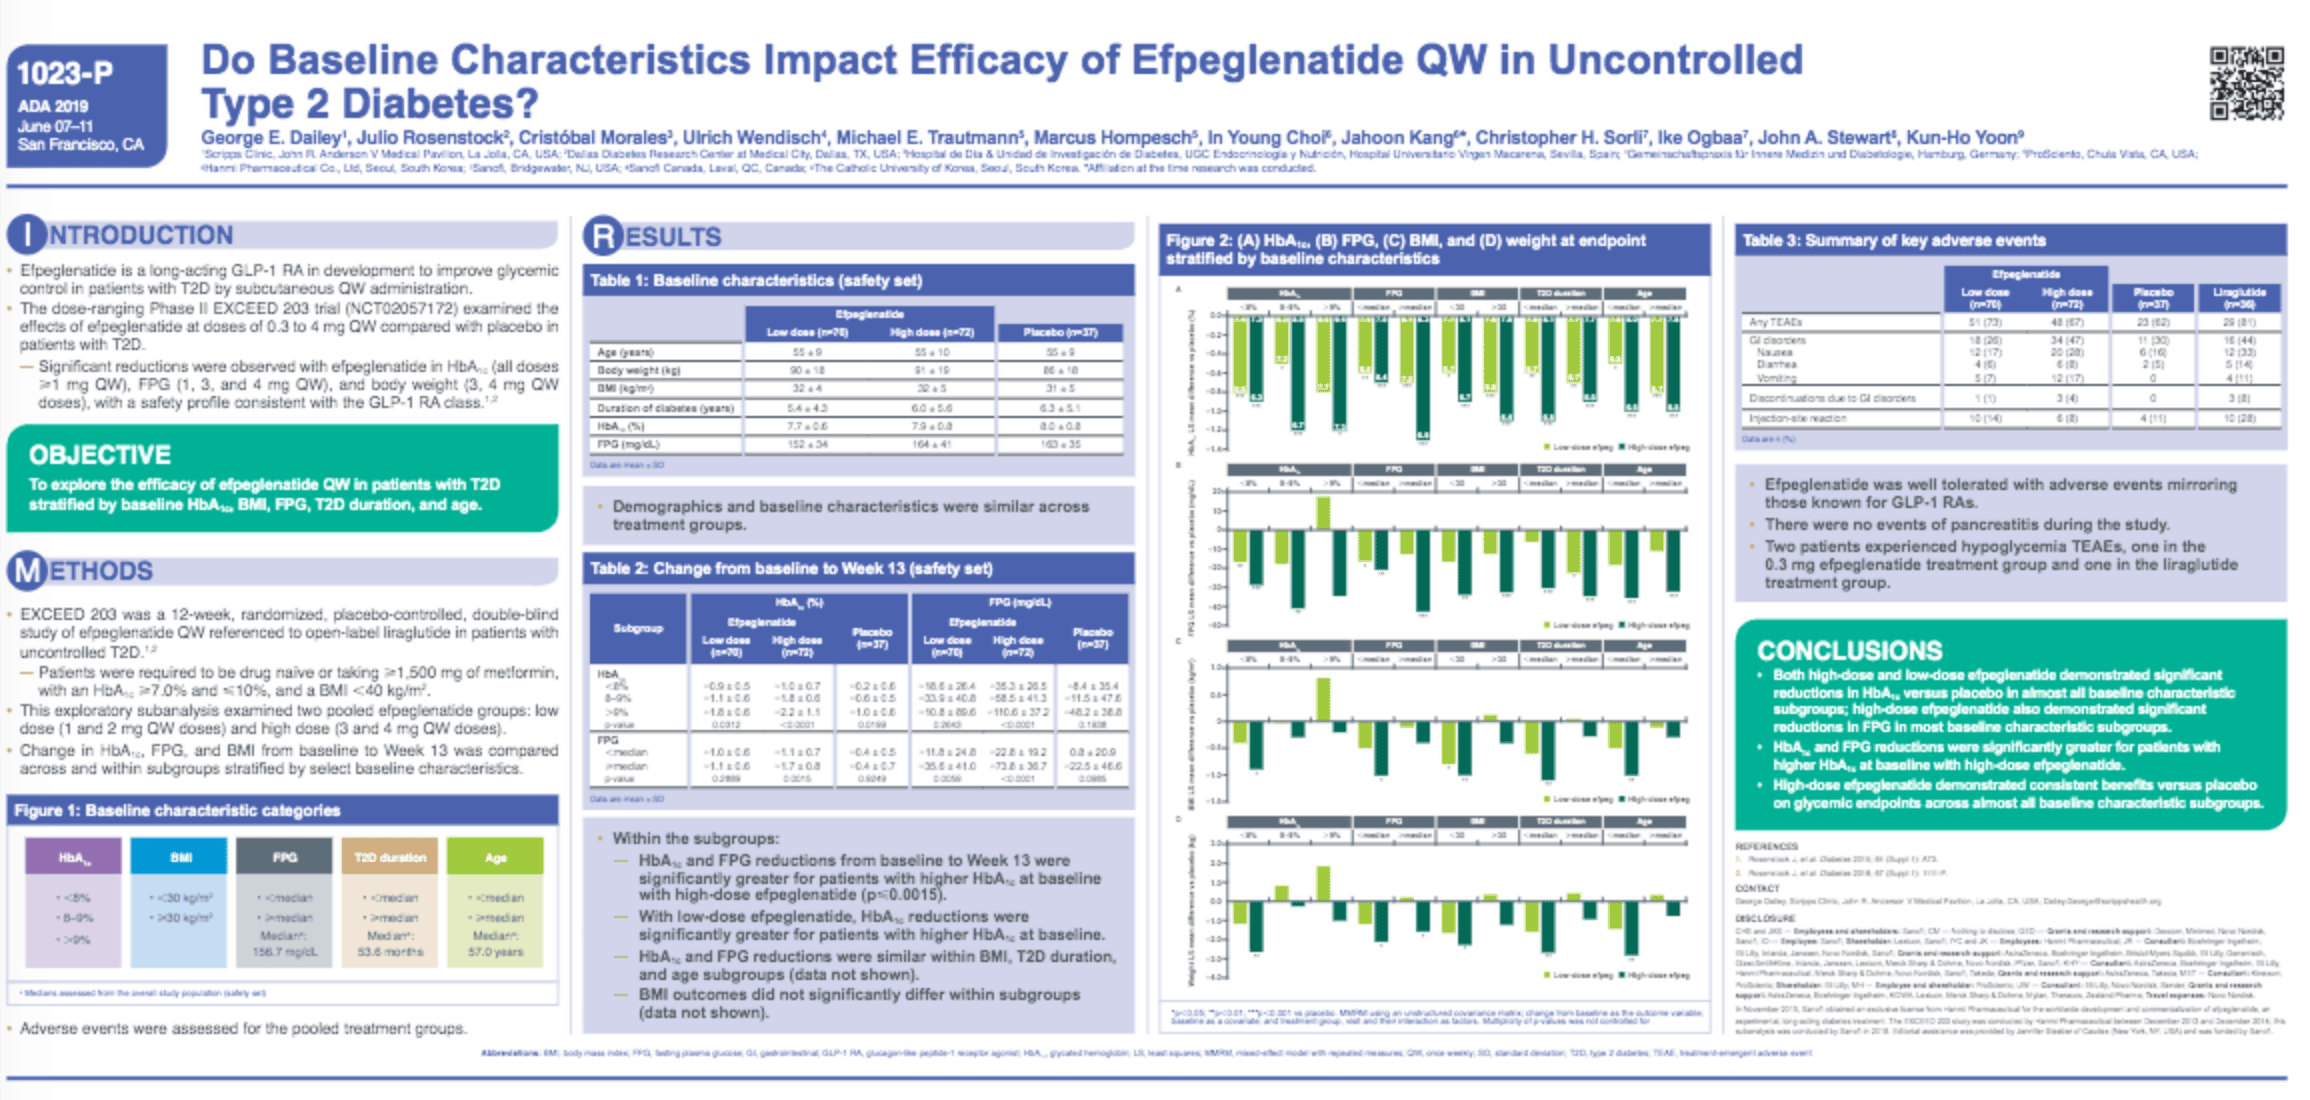 image of Do Baseline Characteristics Impact Efficacy of Efpeglenatide QW in Uncontrolled Type 2 Diabetes?